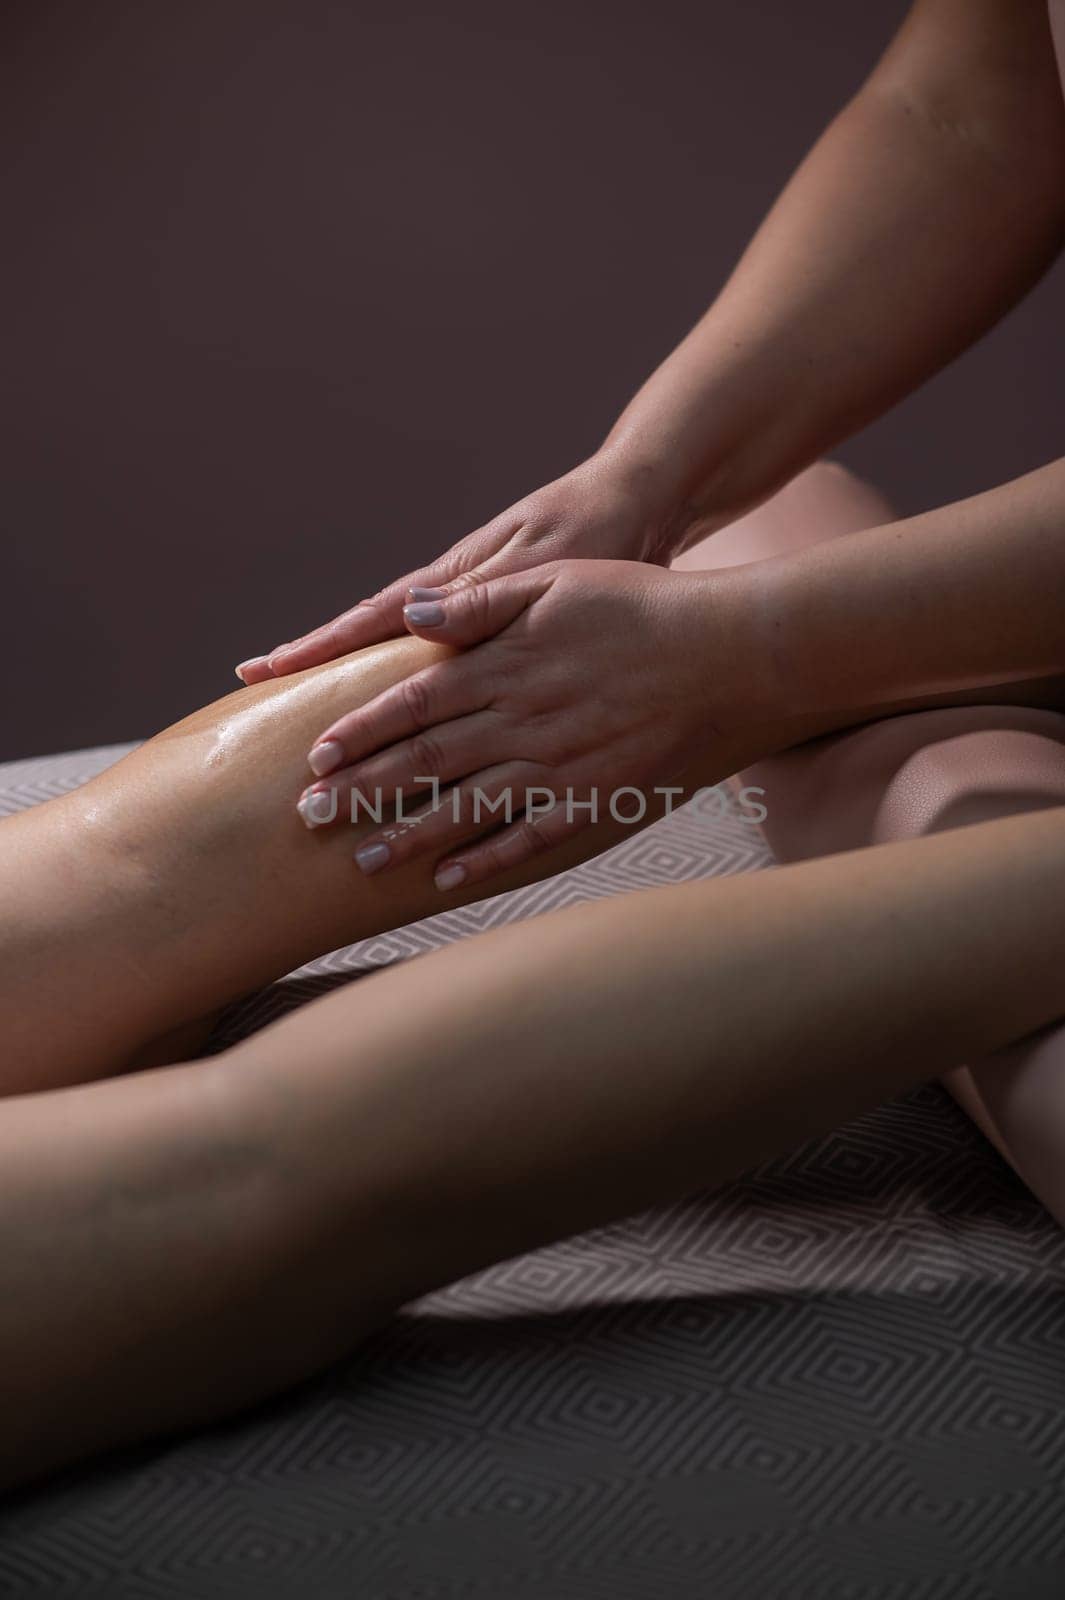 Close-up of a woman's leg massage in a salon. Vertical photo